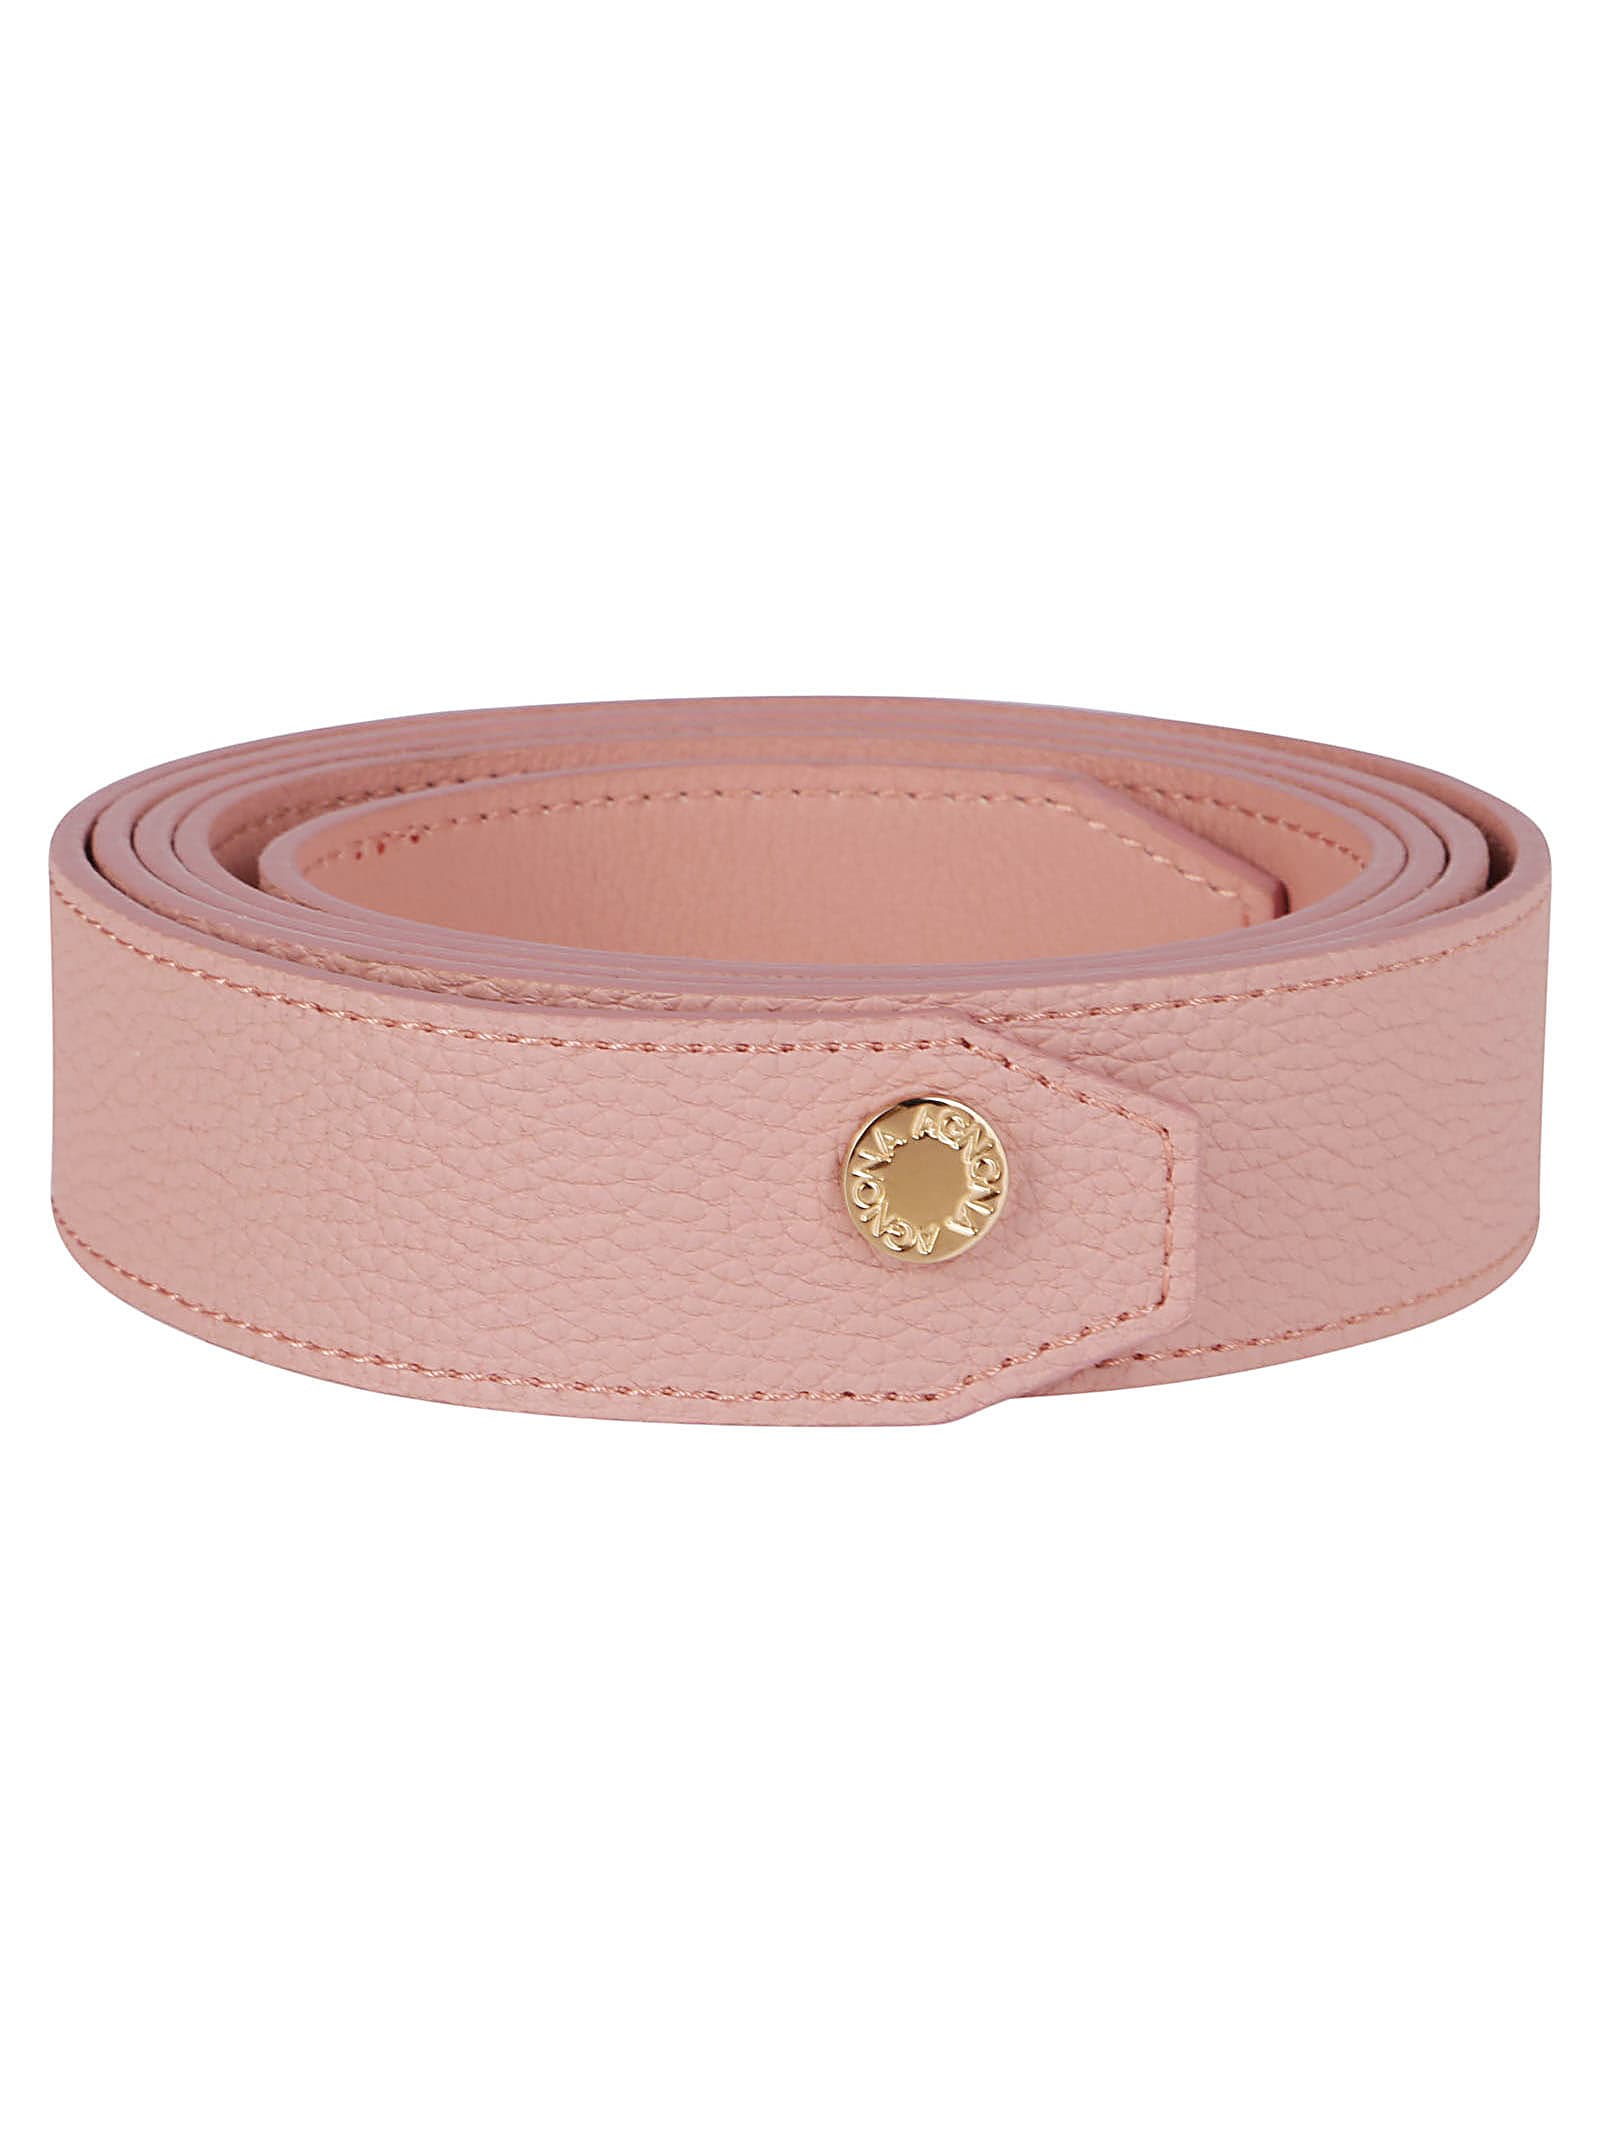 Agnona Pink Leather Belt